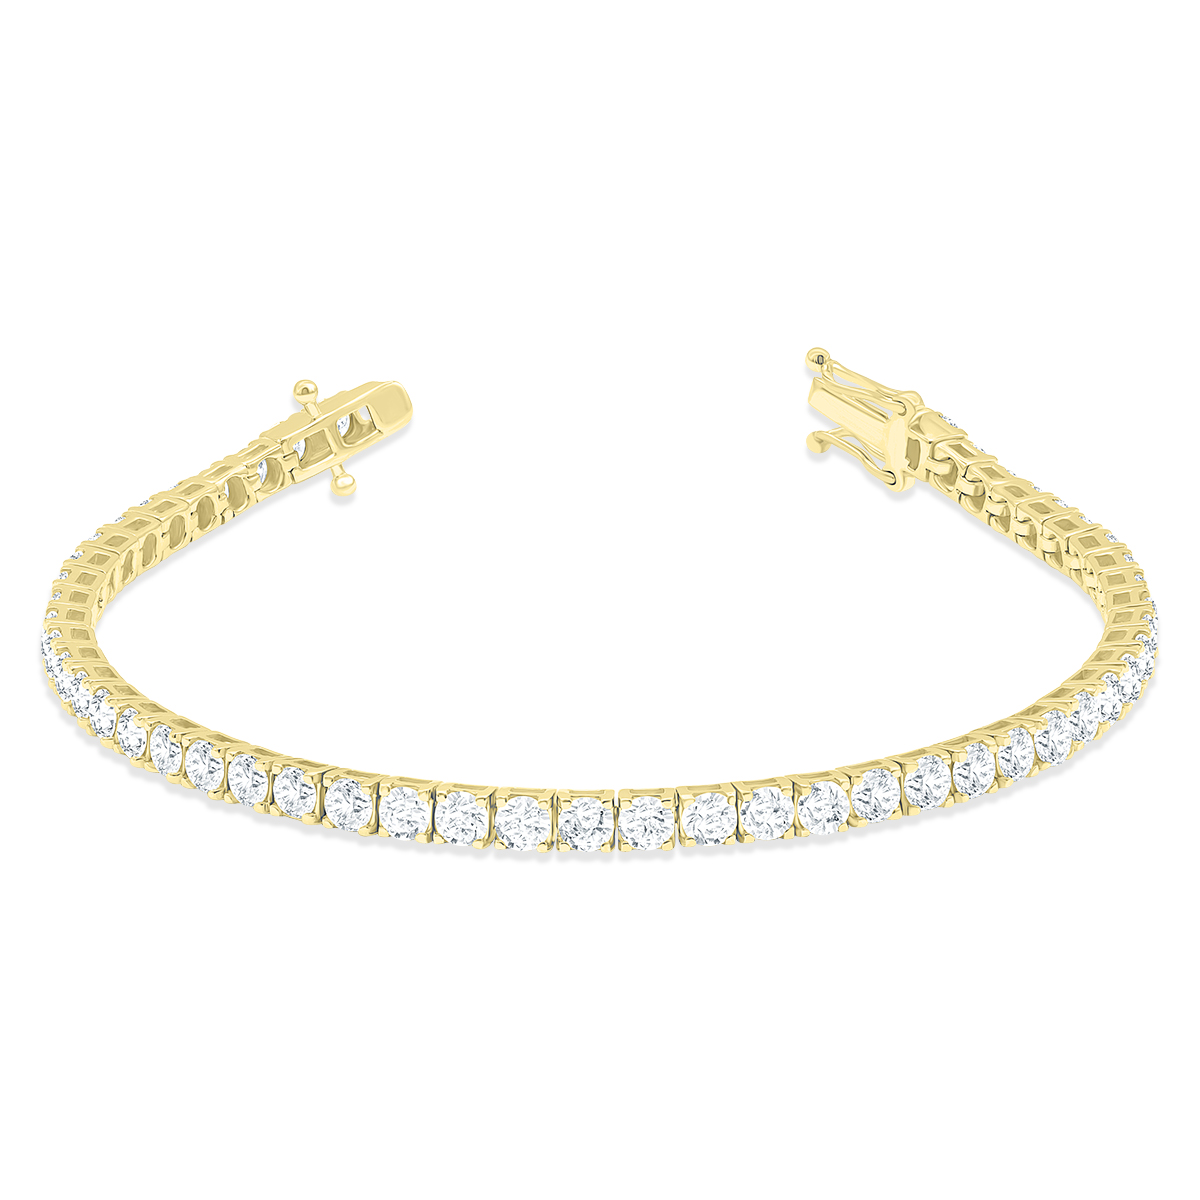 7 Carat TW Diamond Tennis Bracelet in 14K Yellow Gold